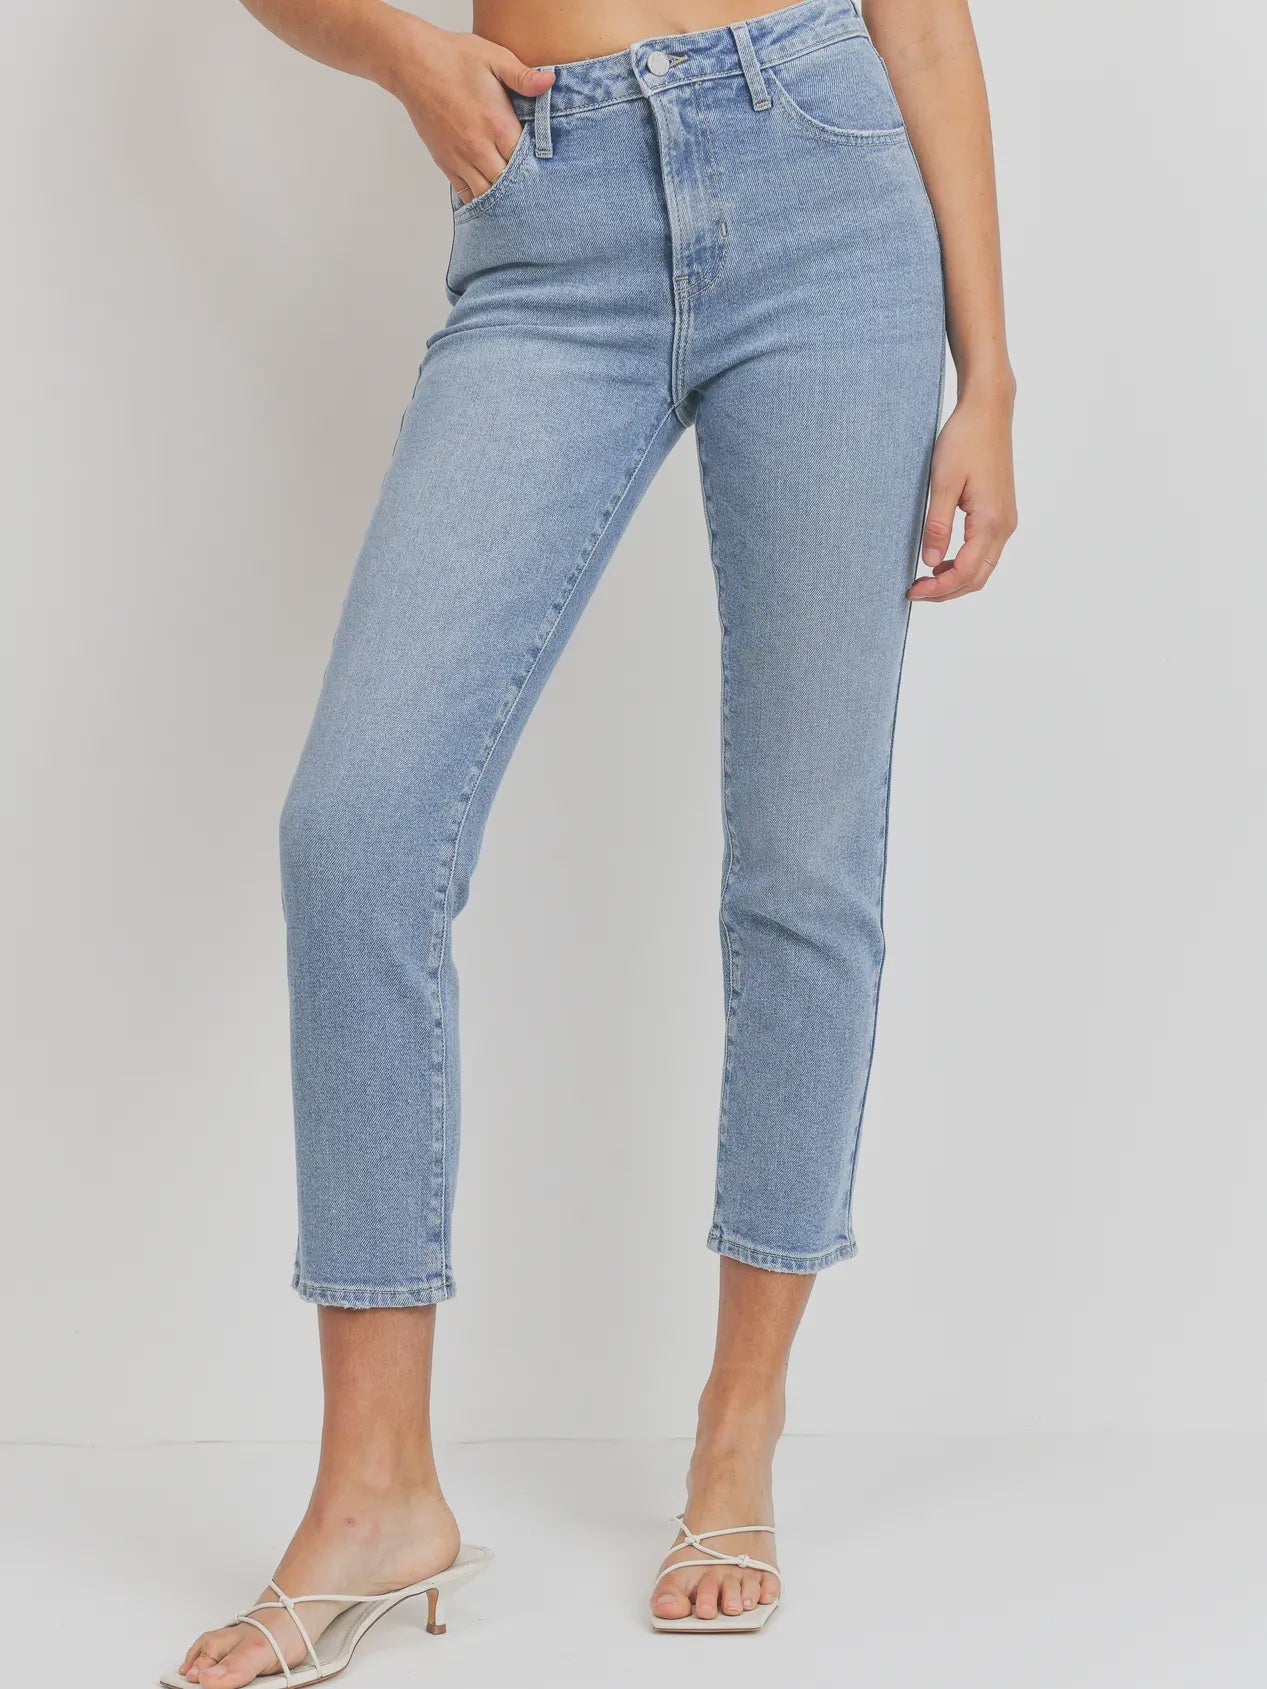 The Willa Slim Straight Jeans by Just Black Denim